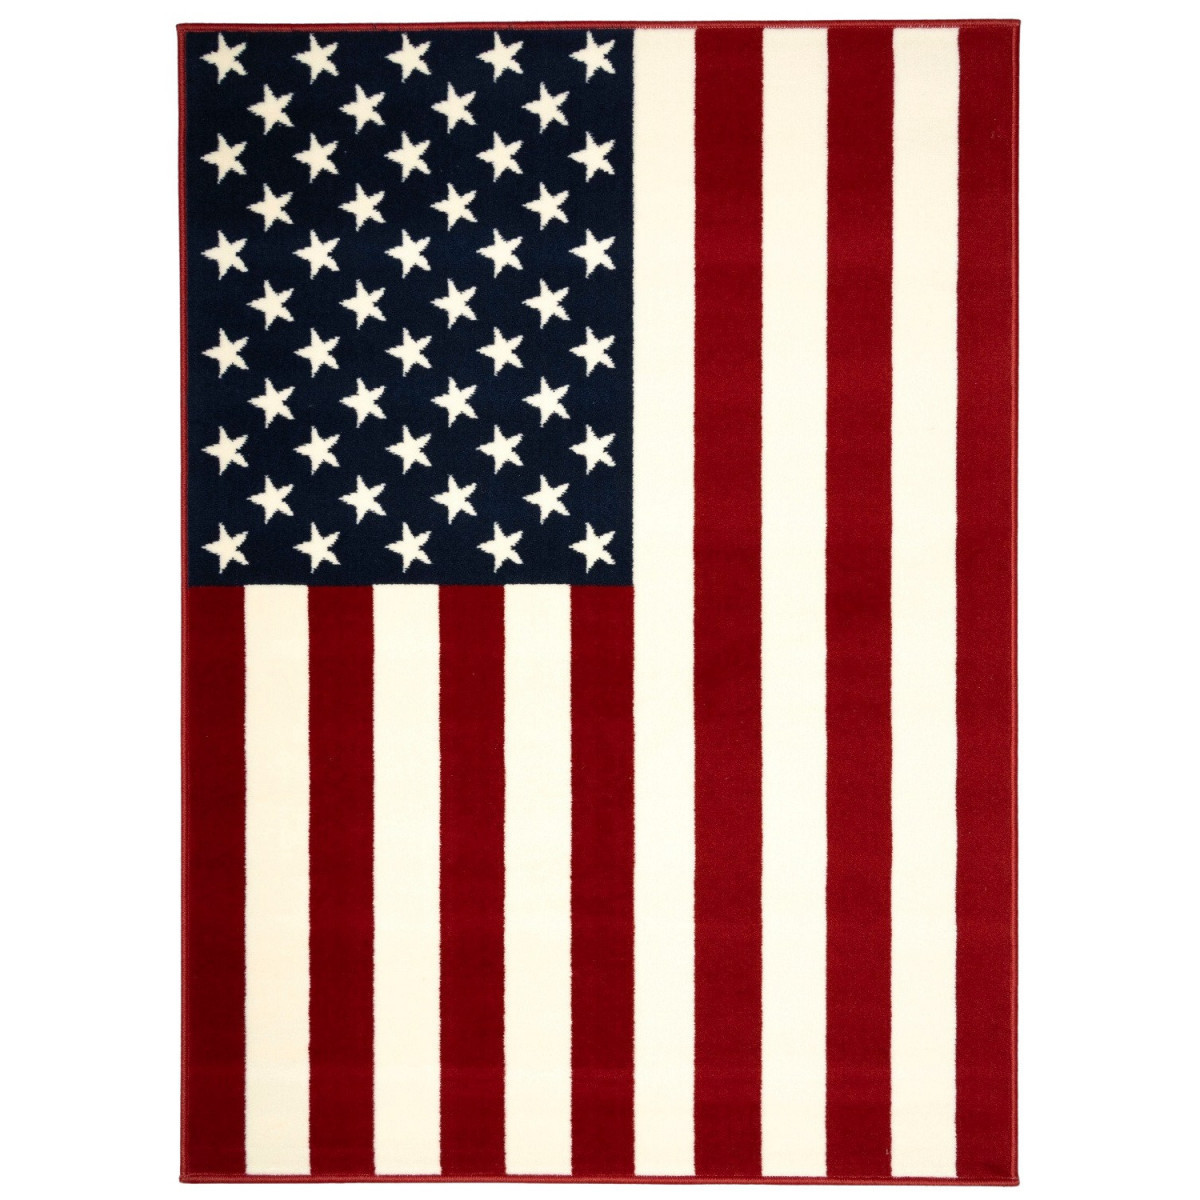 Kusový koberec American flag zrcadlově  - 120x170 cm Alfa Carpets